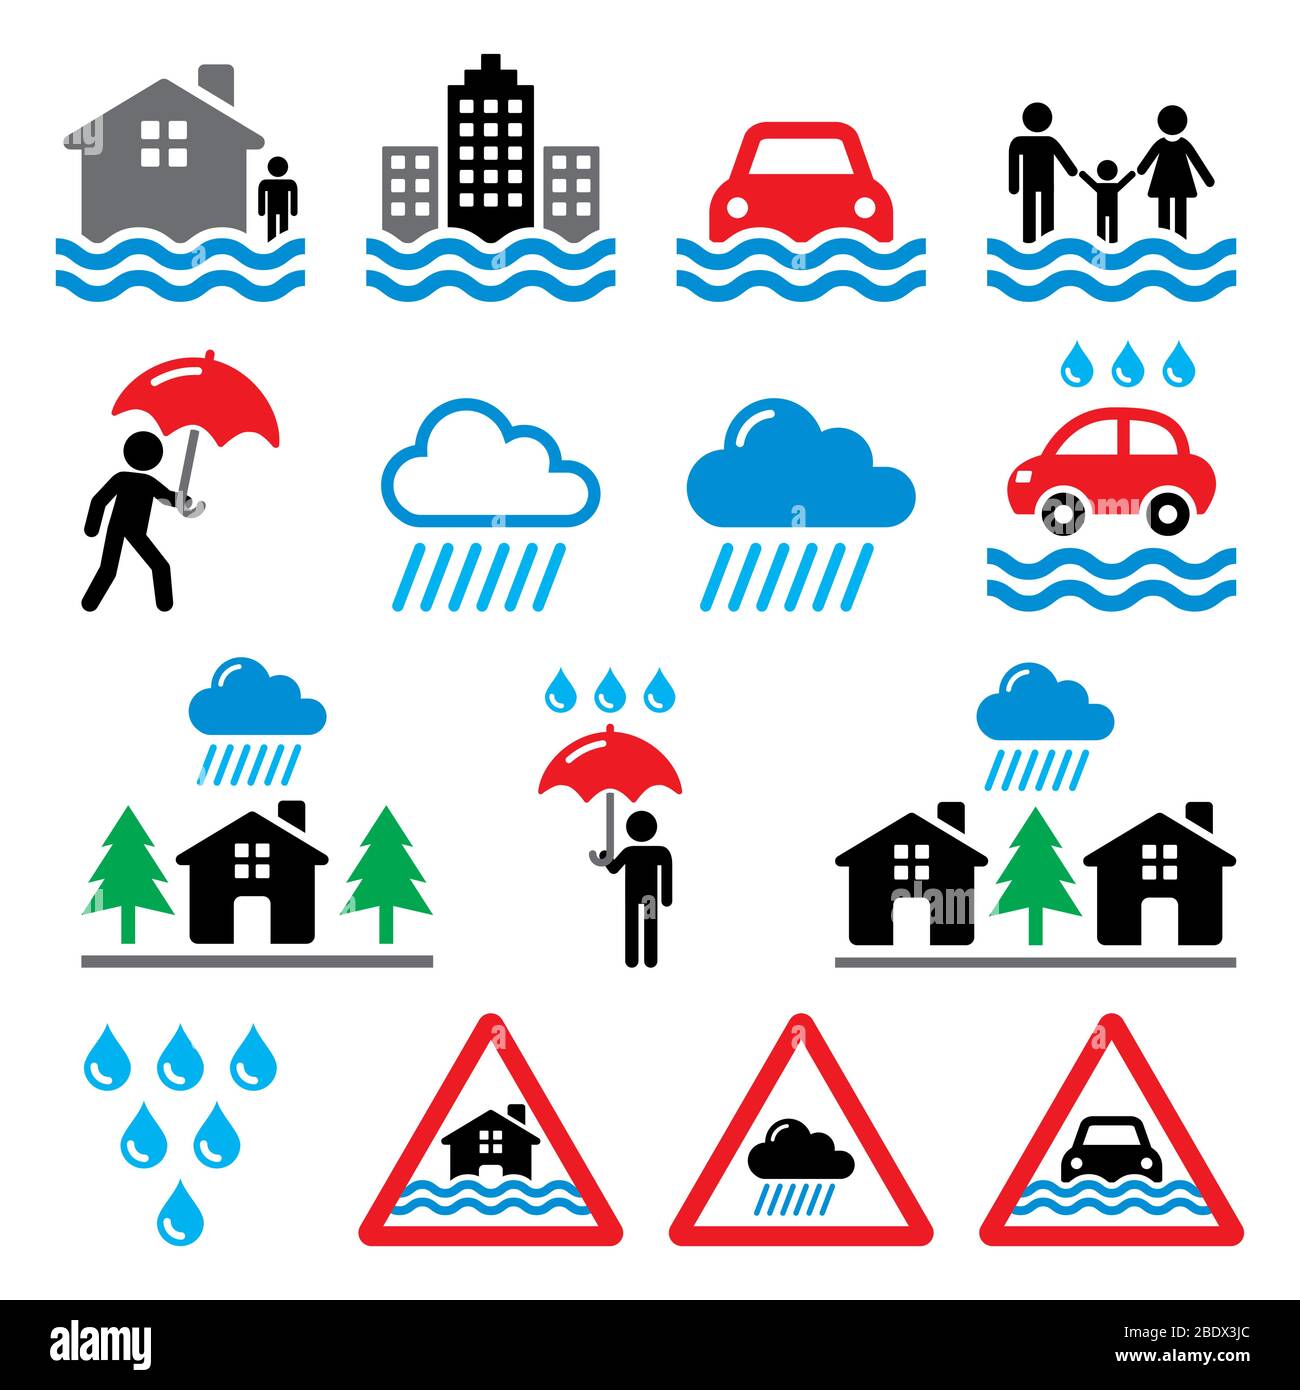 Flood, natural disaster, heavy rain icons set - environment, natural disaster concept Stock Vector